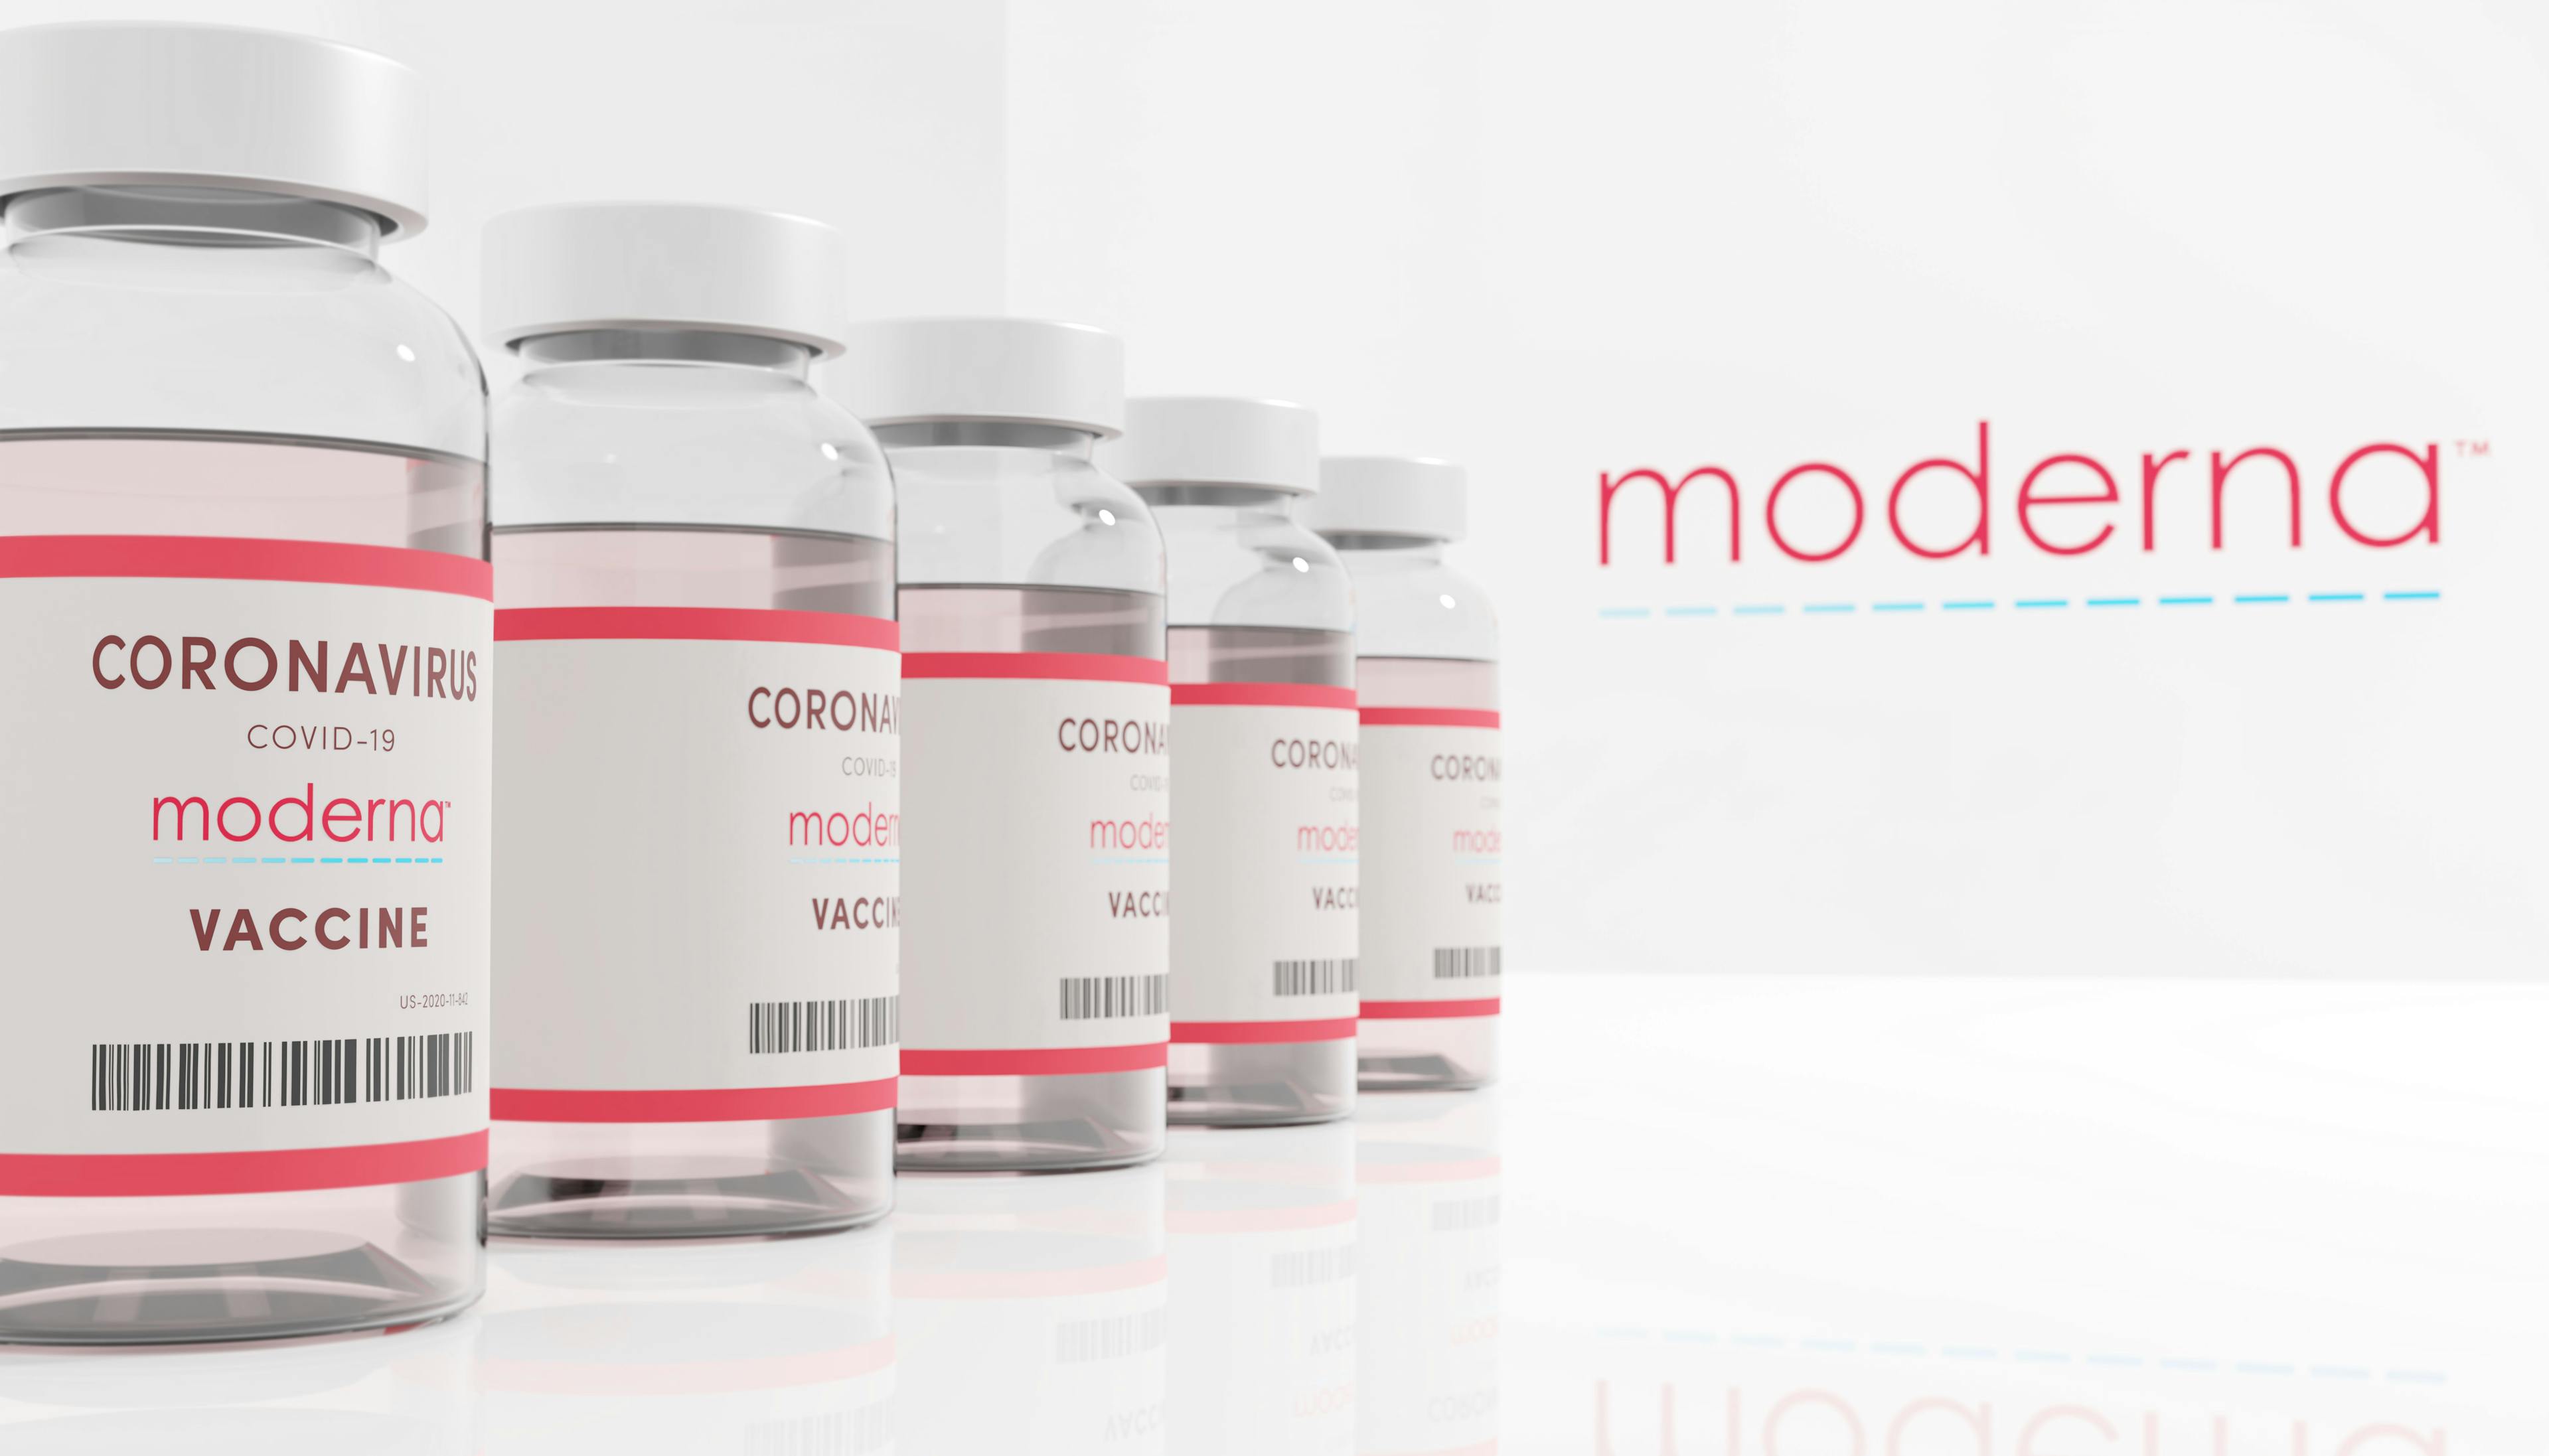 FDA Increased the Maximum Doses per Vial for Moderna COVID-19 Vaccine